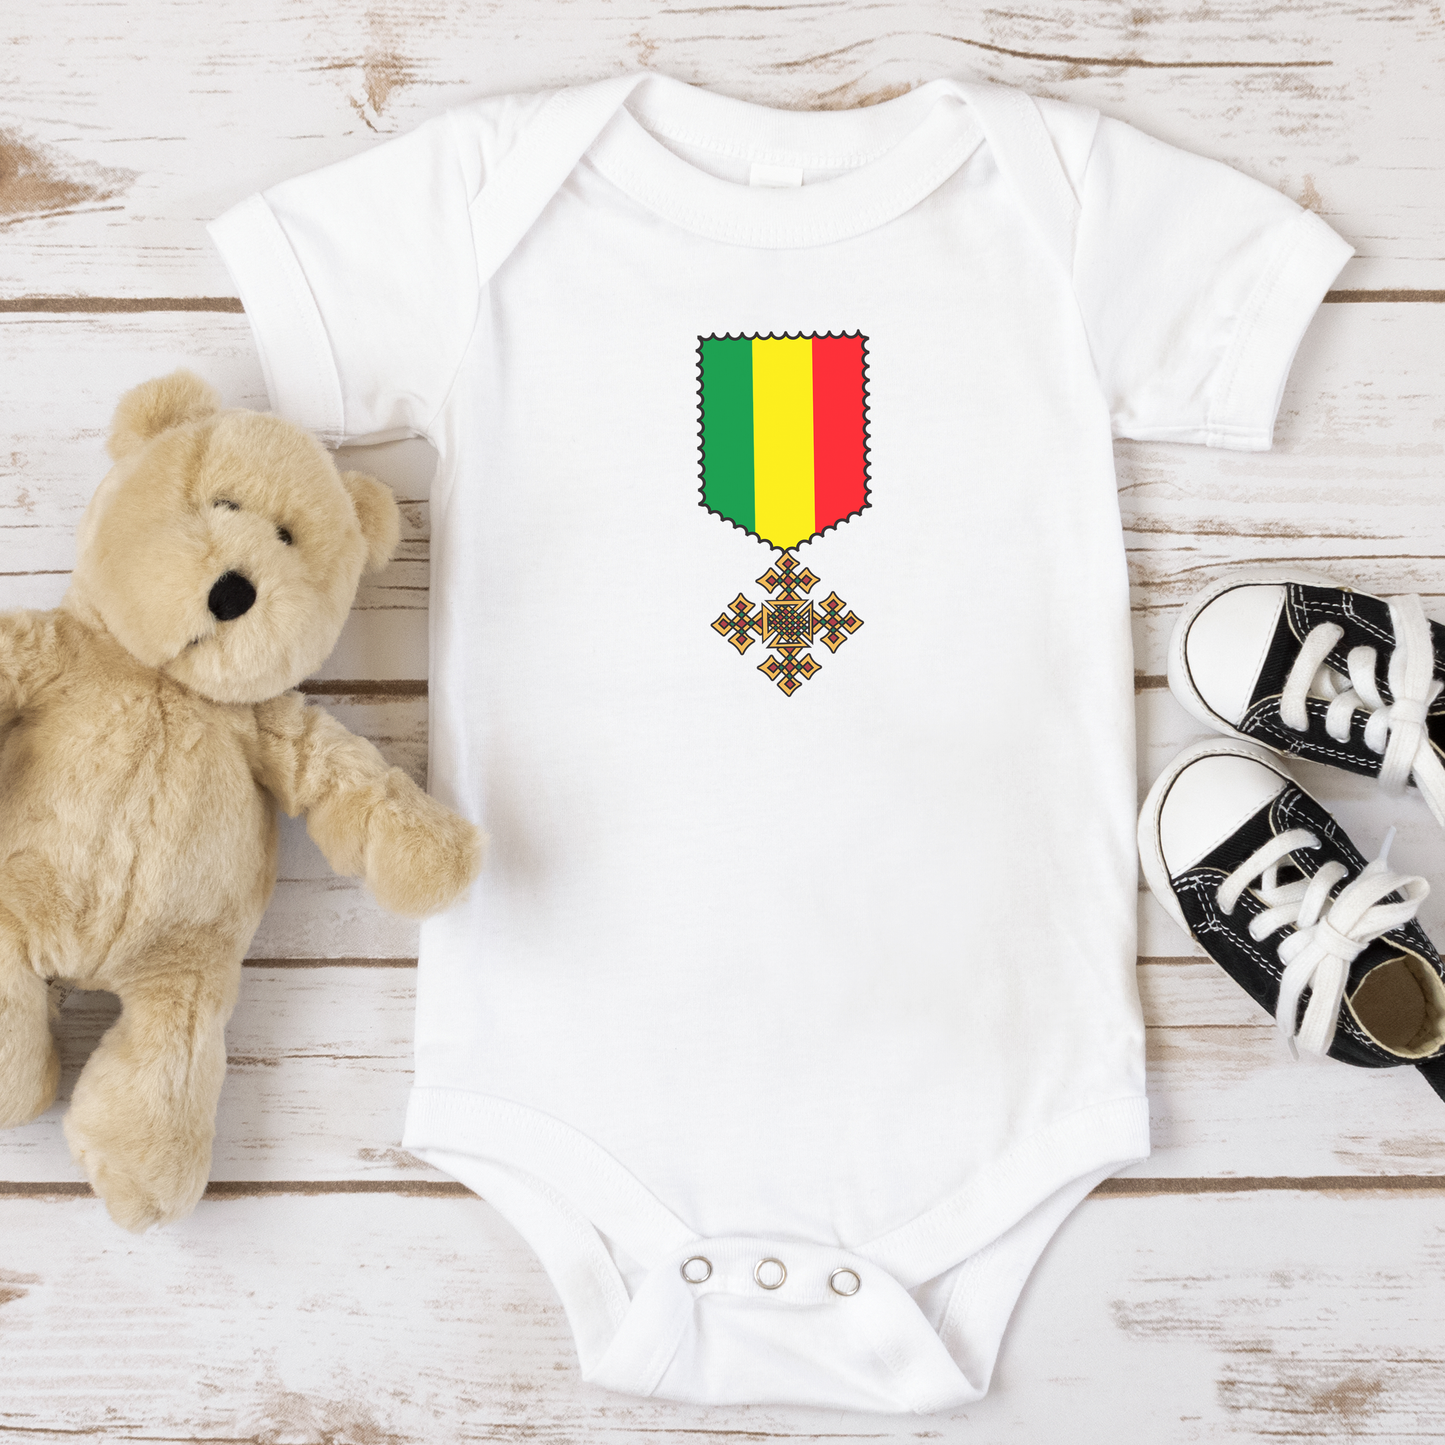 Ethiopian Orthodox Cross  infant - Baby Onesies